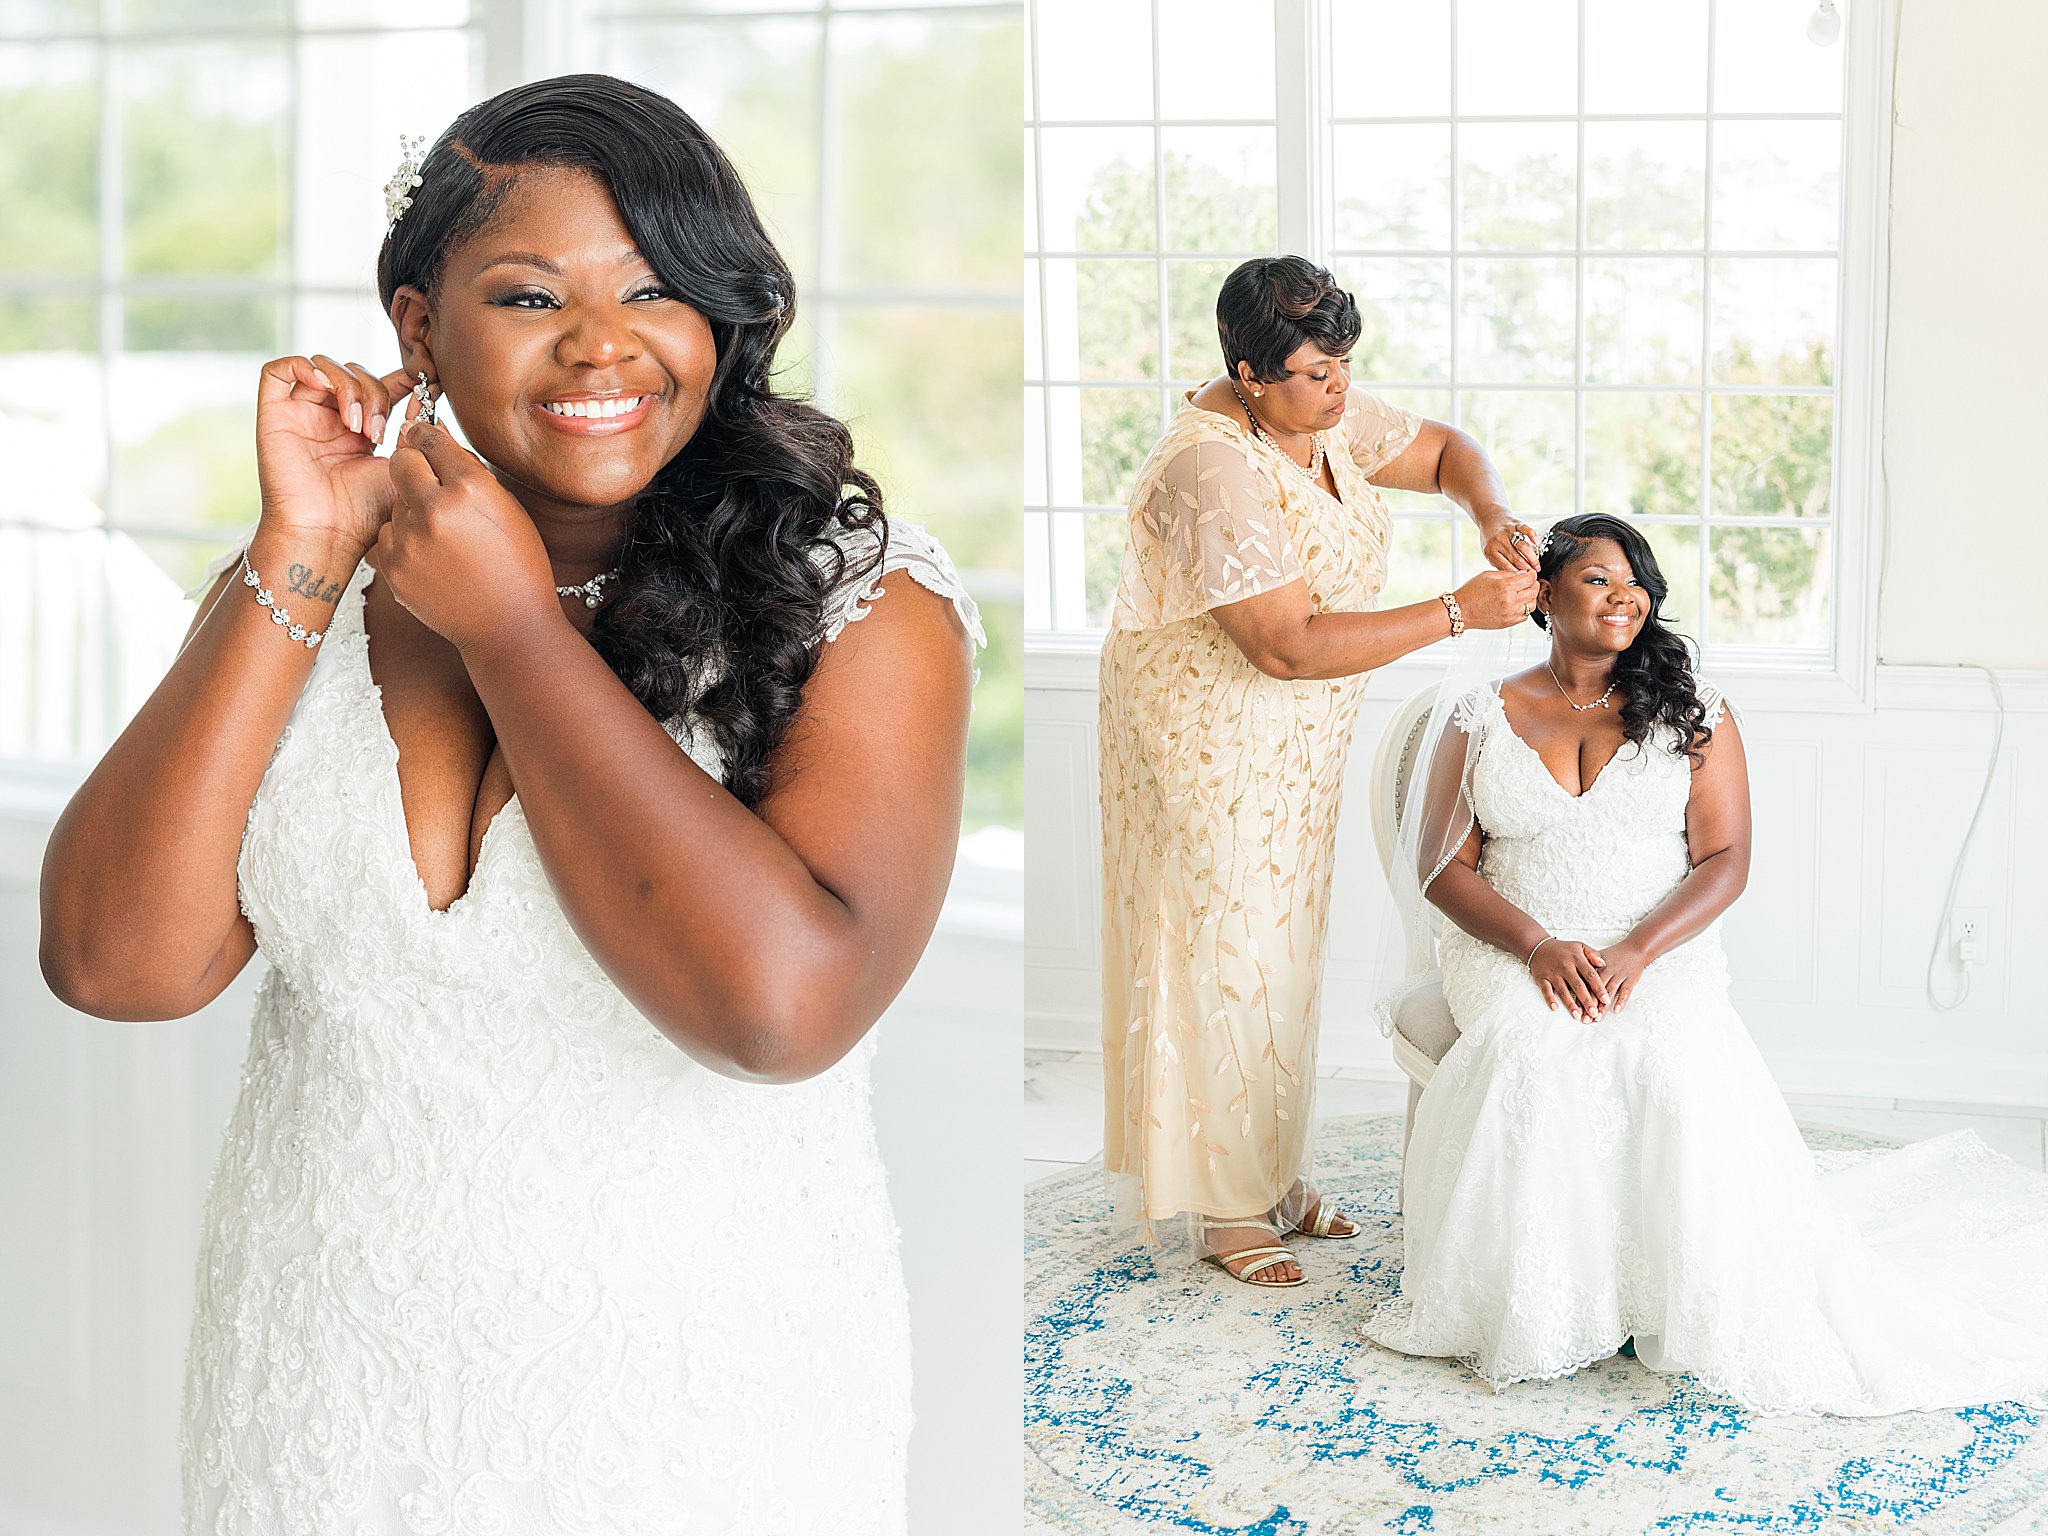 Choosing the Perfect Virginia Wedding Photographer by Vinluan Photography